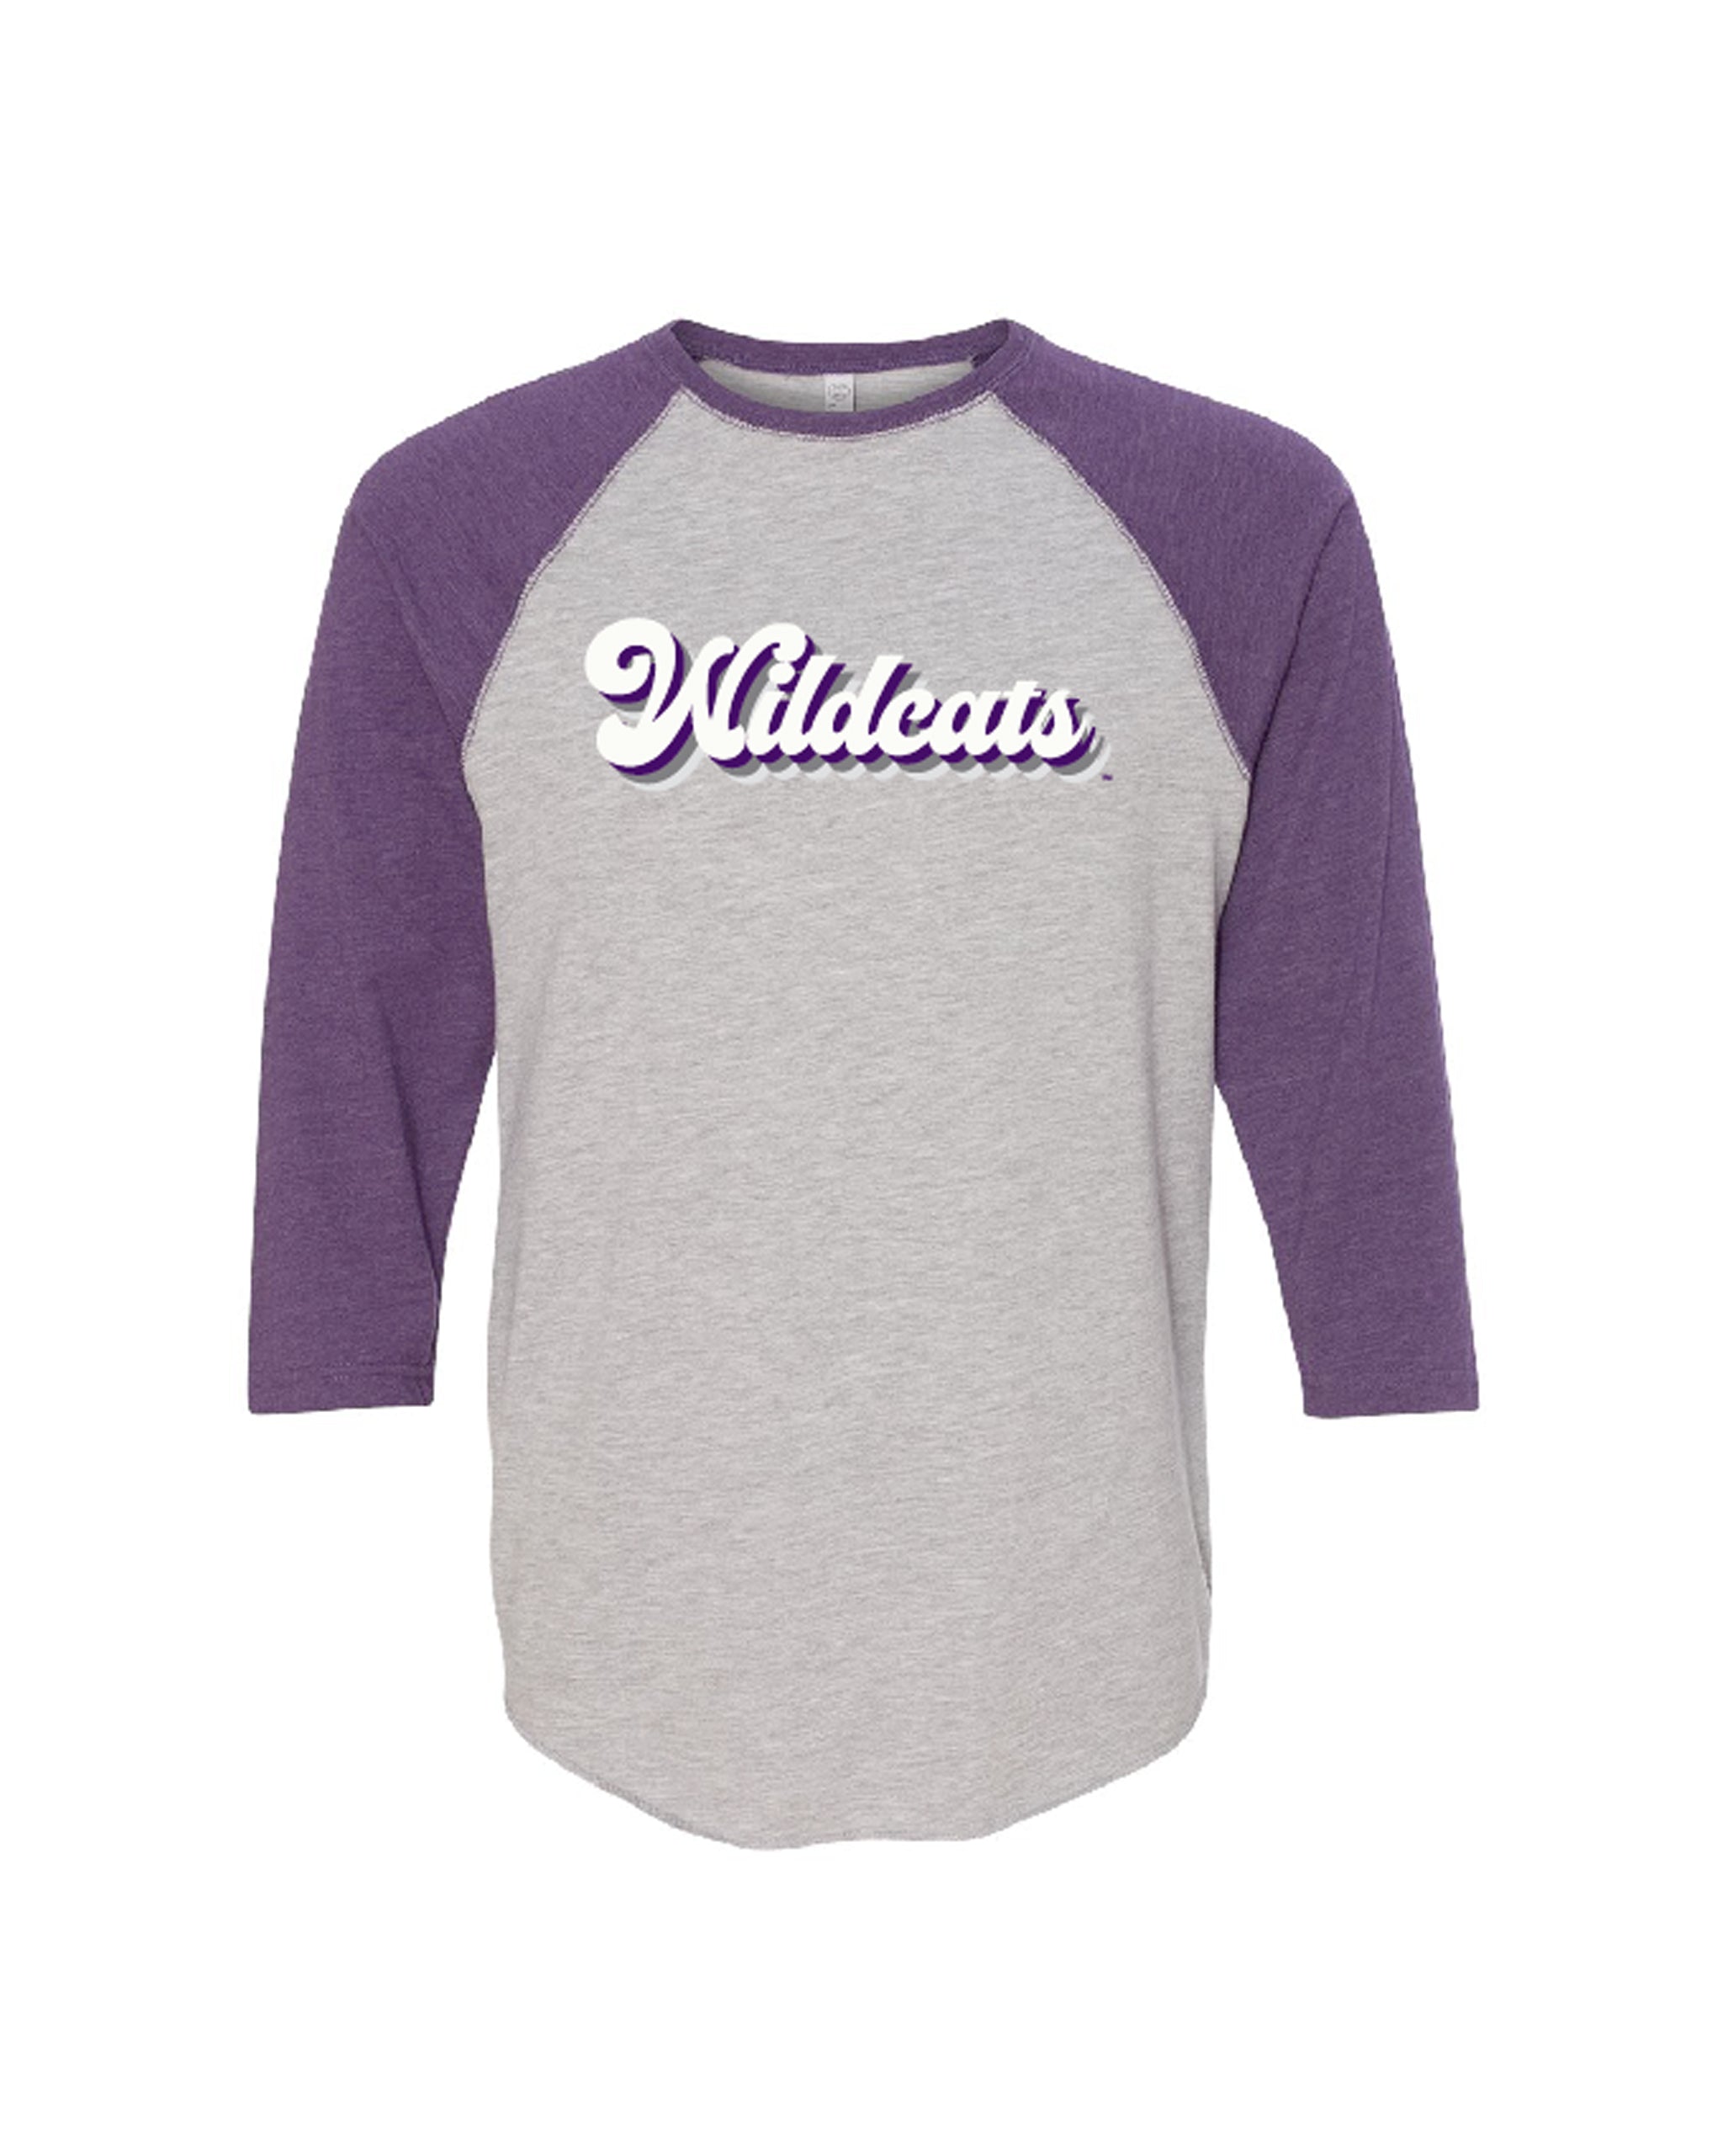 KSU Wildcats - LAT Men's Baseball T-Shirt - 6930